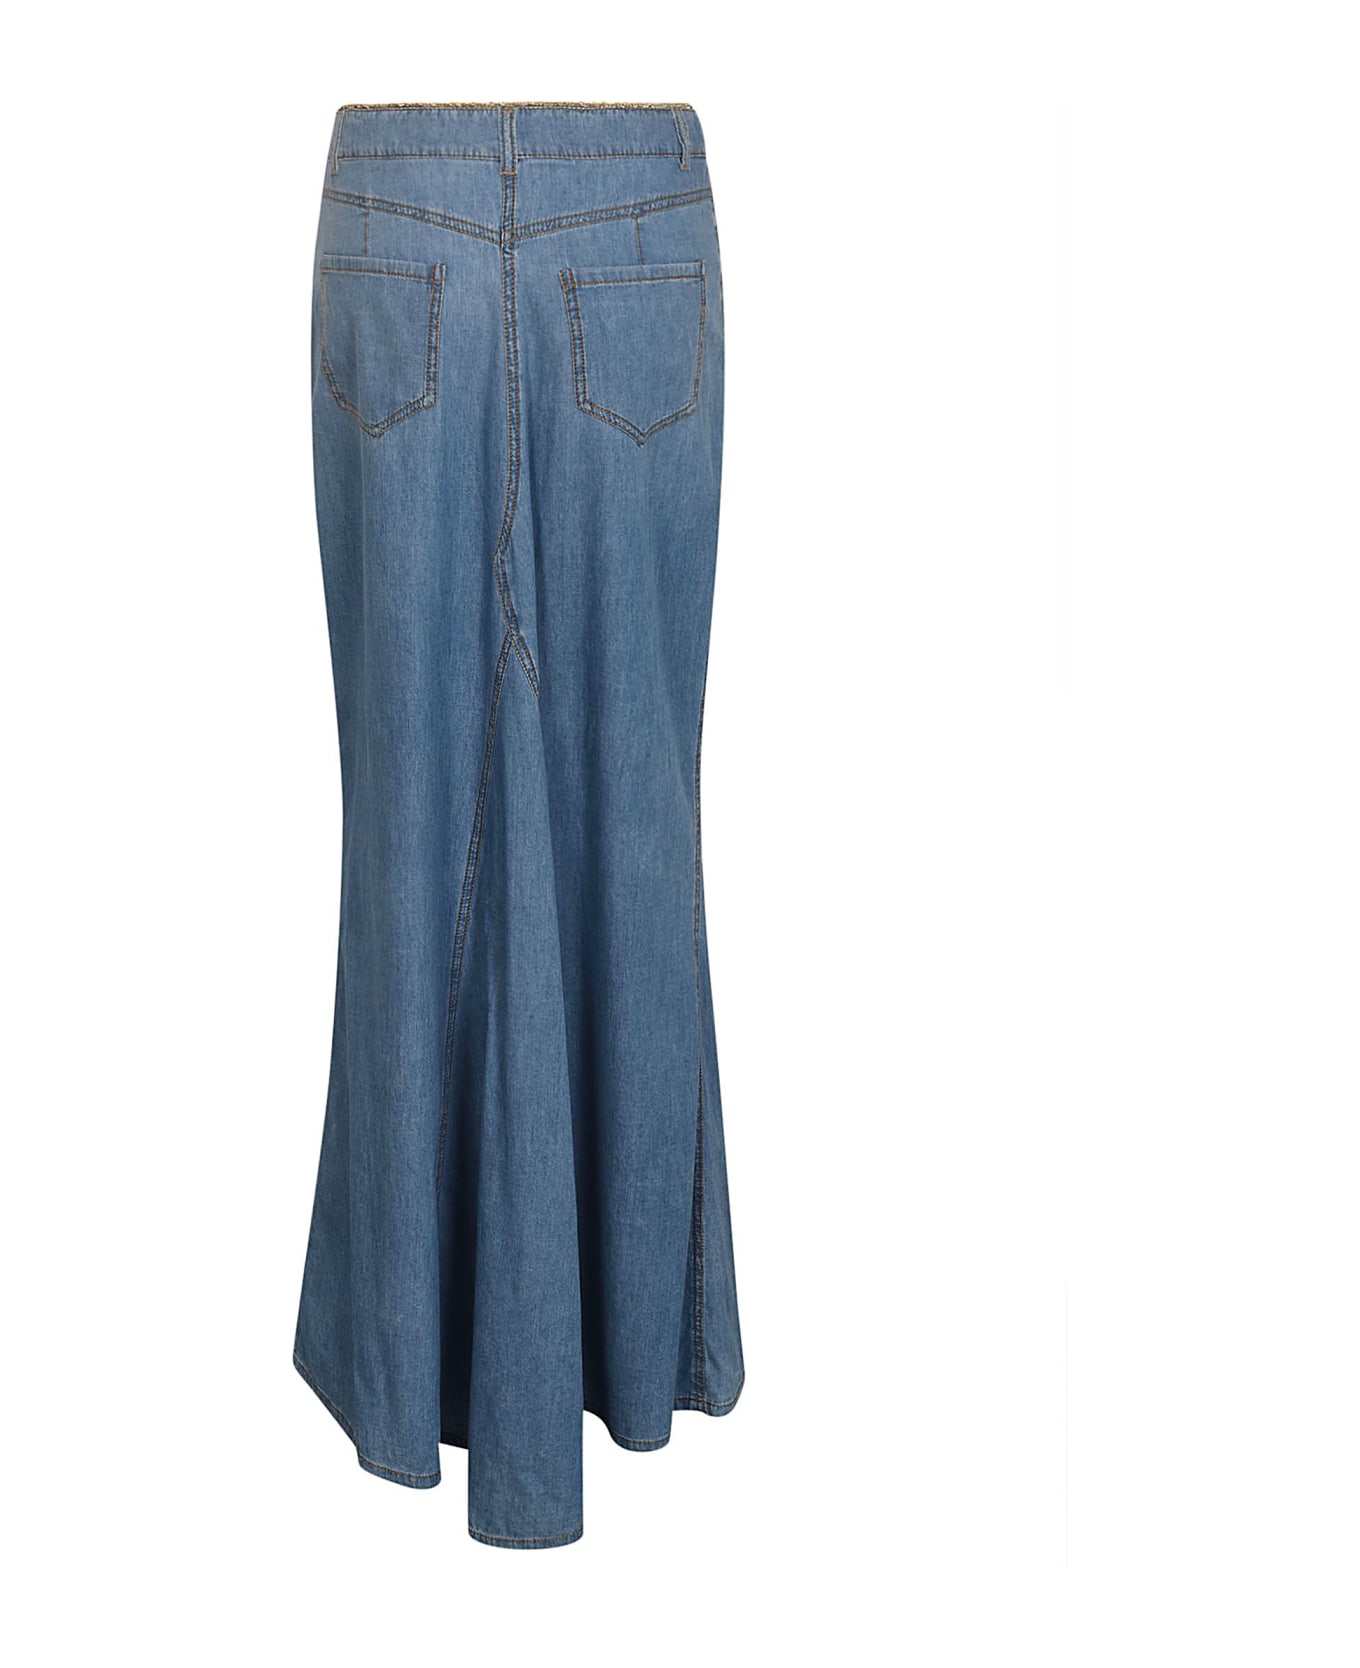 Ermanno Scervino Denim Long Skirt - Bright Cobalt